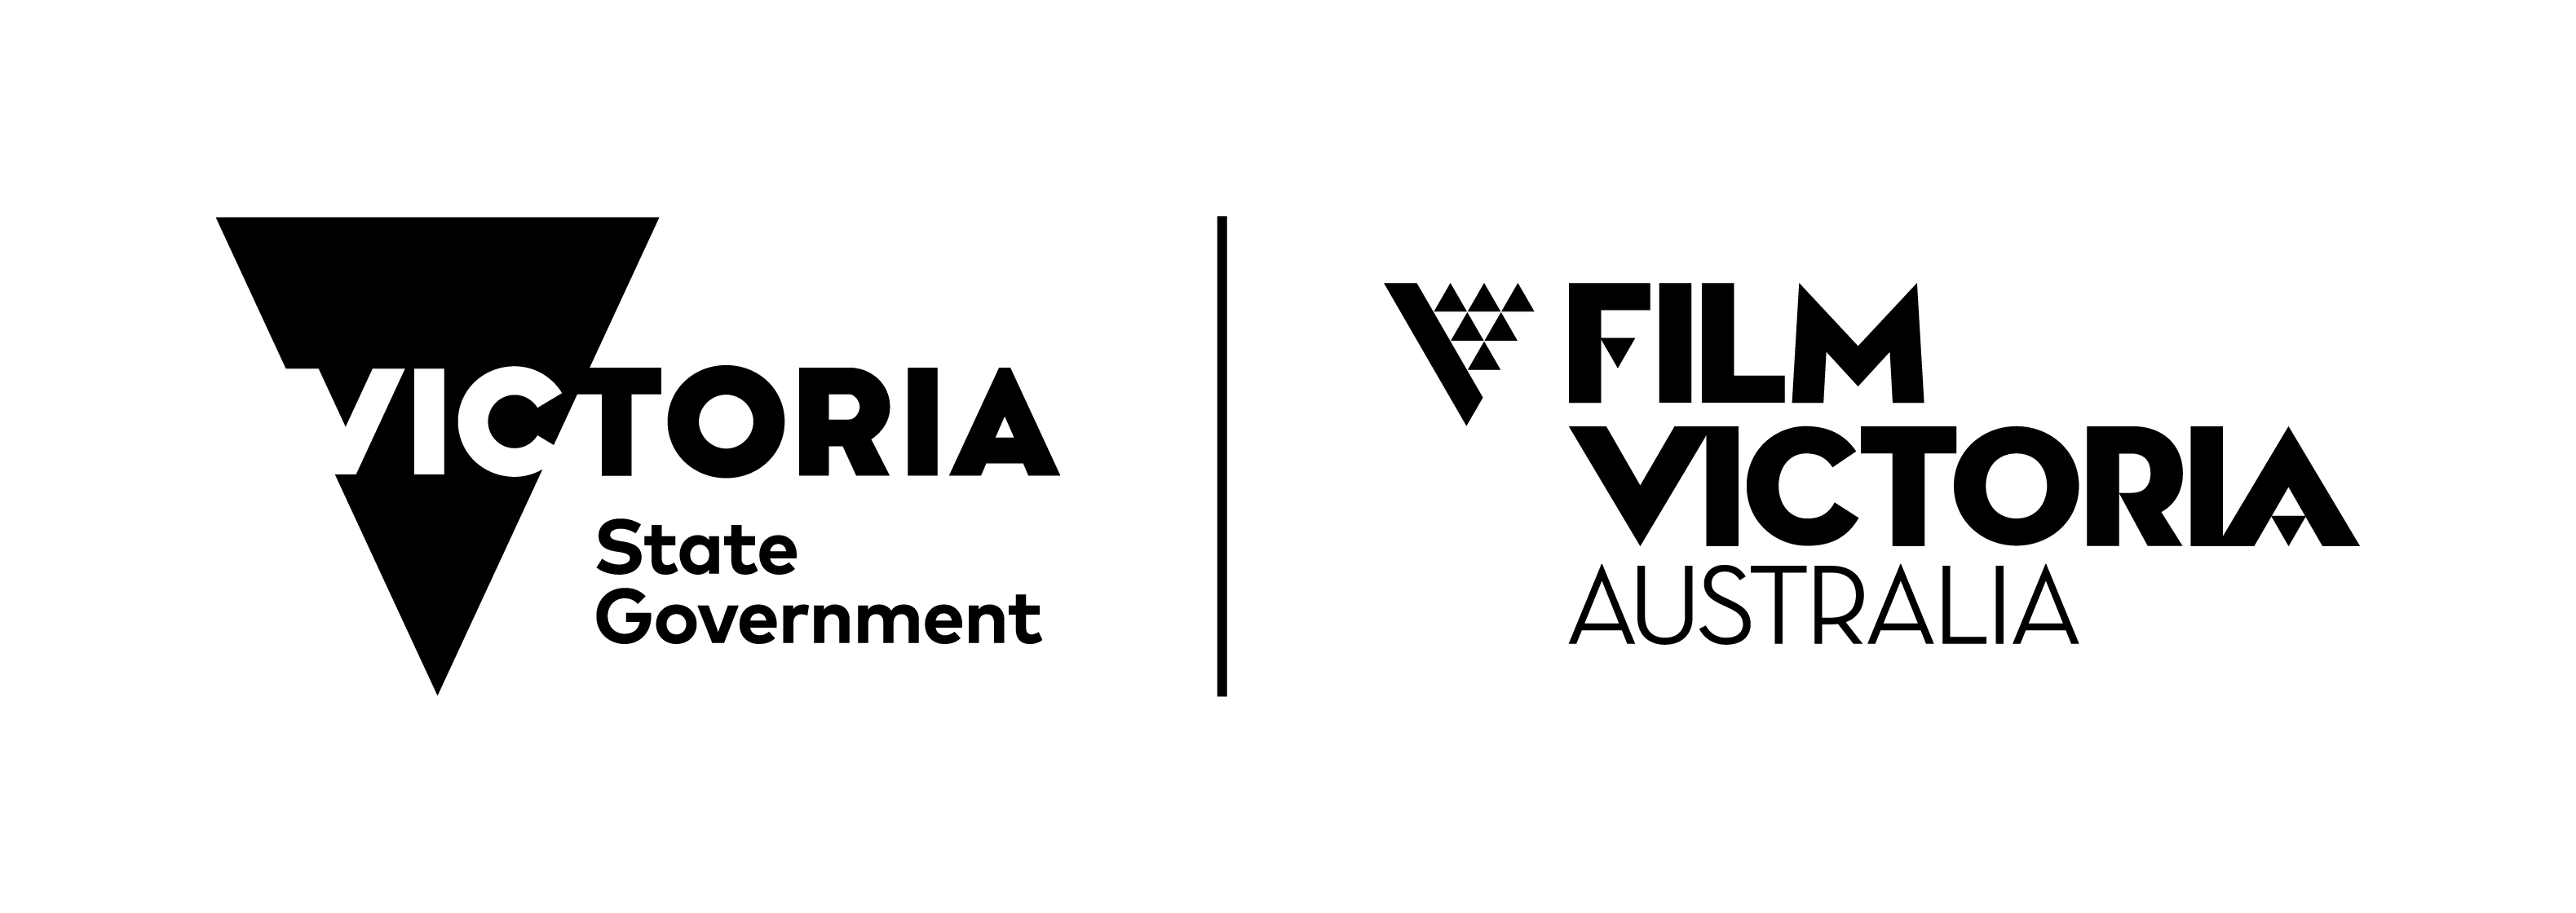 Film vic logo